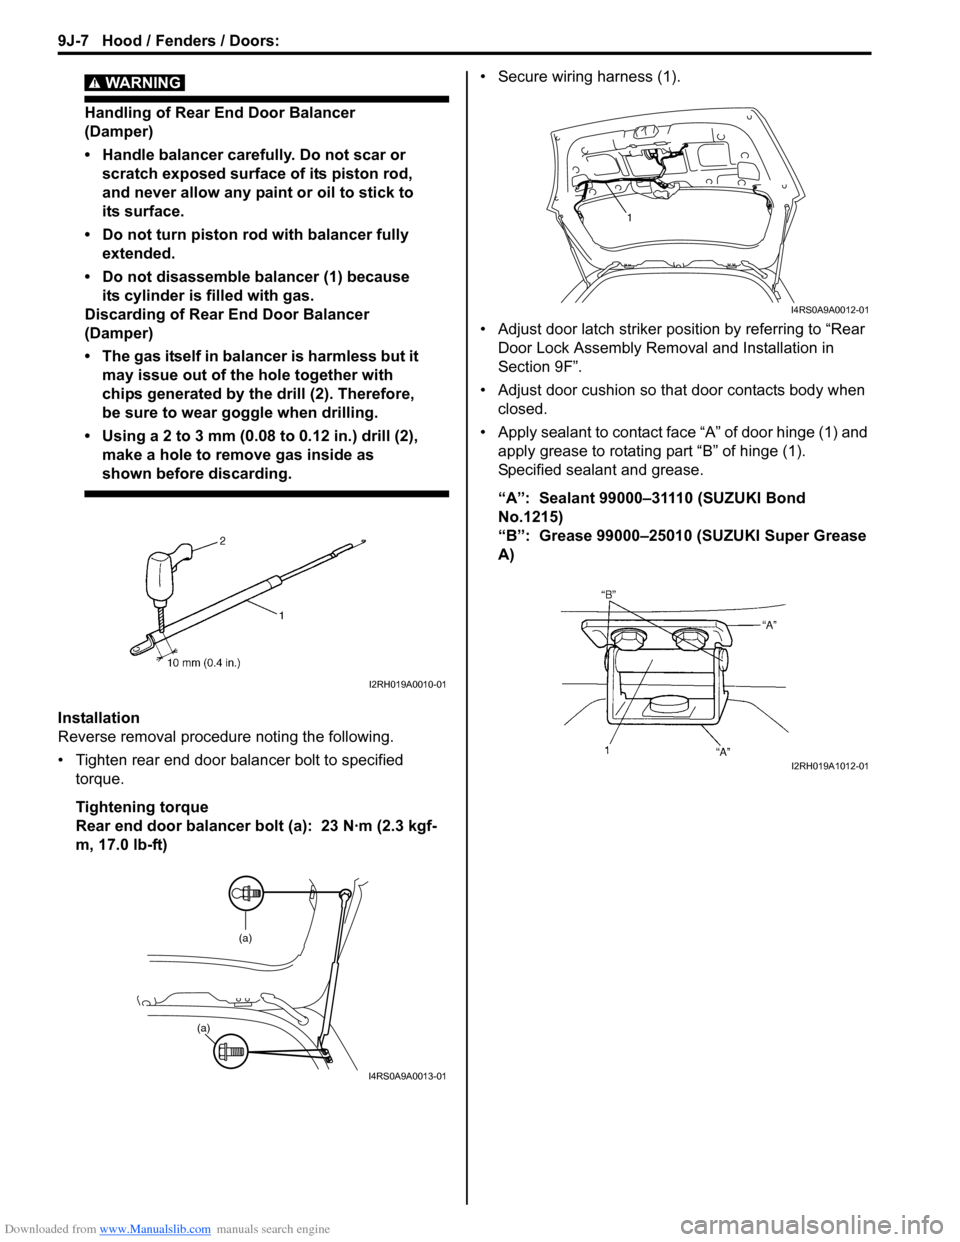 SUZUKI SWIFT 2006 2.G Service Manual PDF Downloaded from www.Manualslib.com manuals search engine 9J-7 Hood / Fenders / Doors: 
WARNING! 
Handling of Rear End Door Balancer 
(Damper)
• Handle balancer carefully. Do not scar or scratch expo